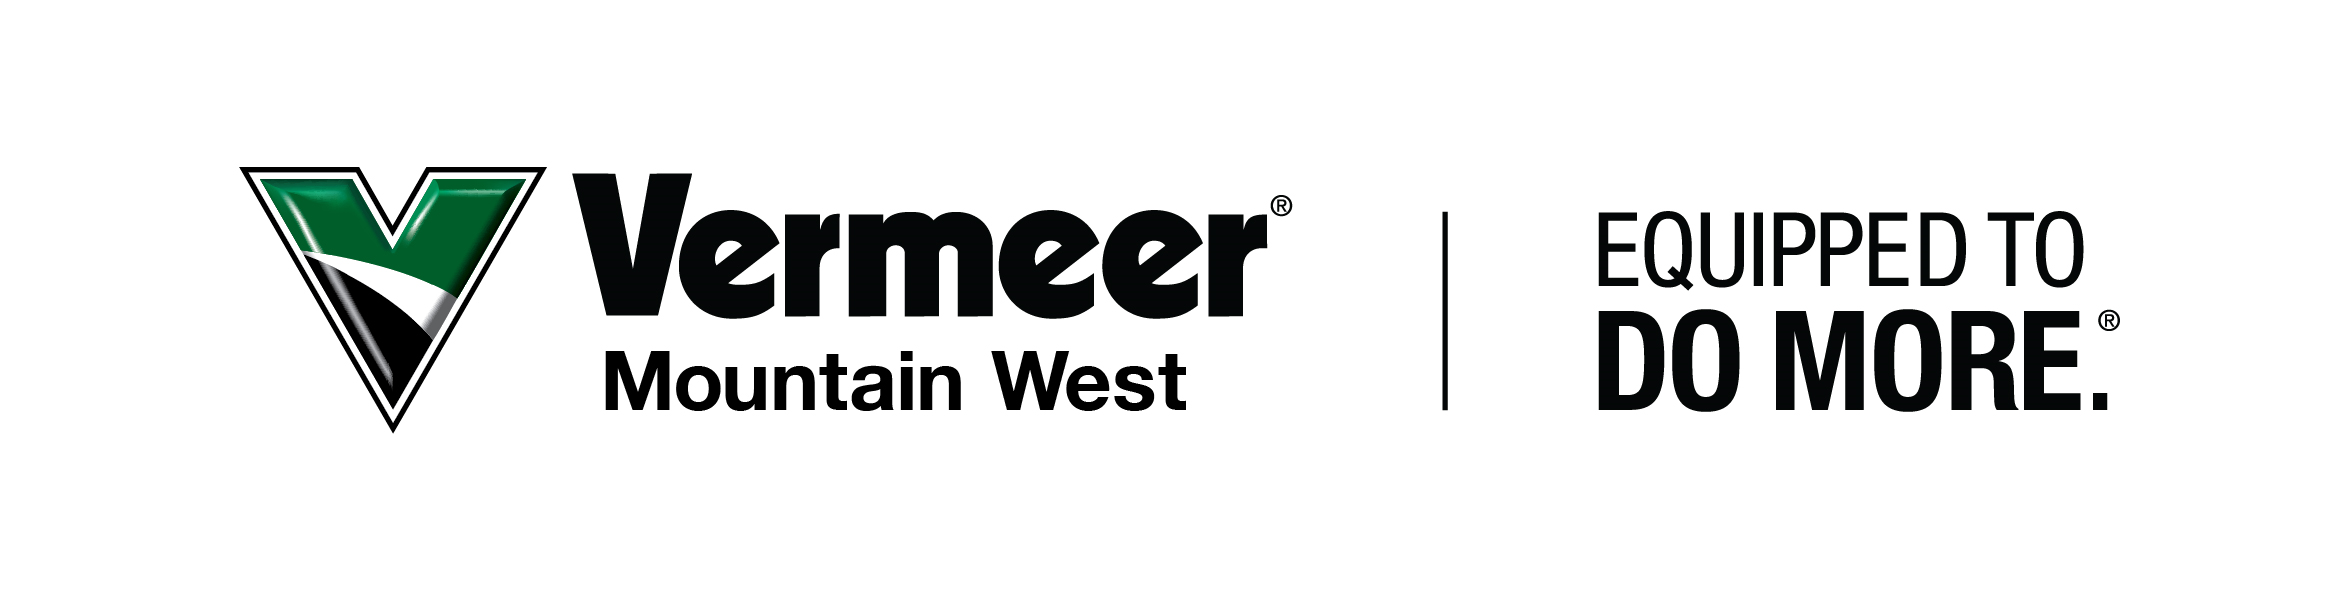 Vermeer Mountain West logo